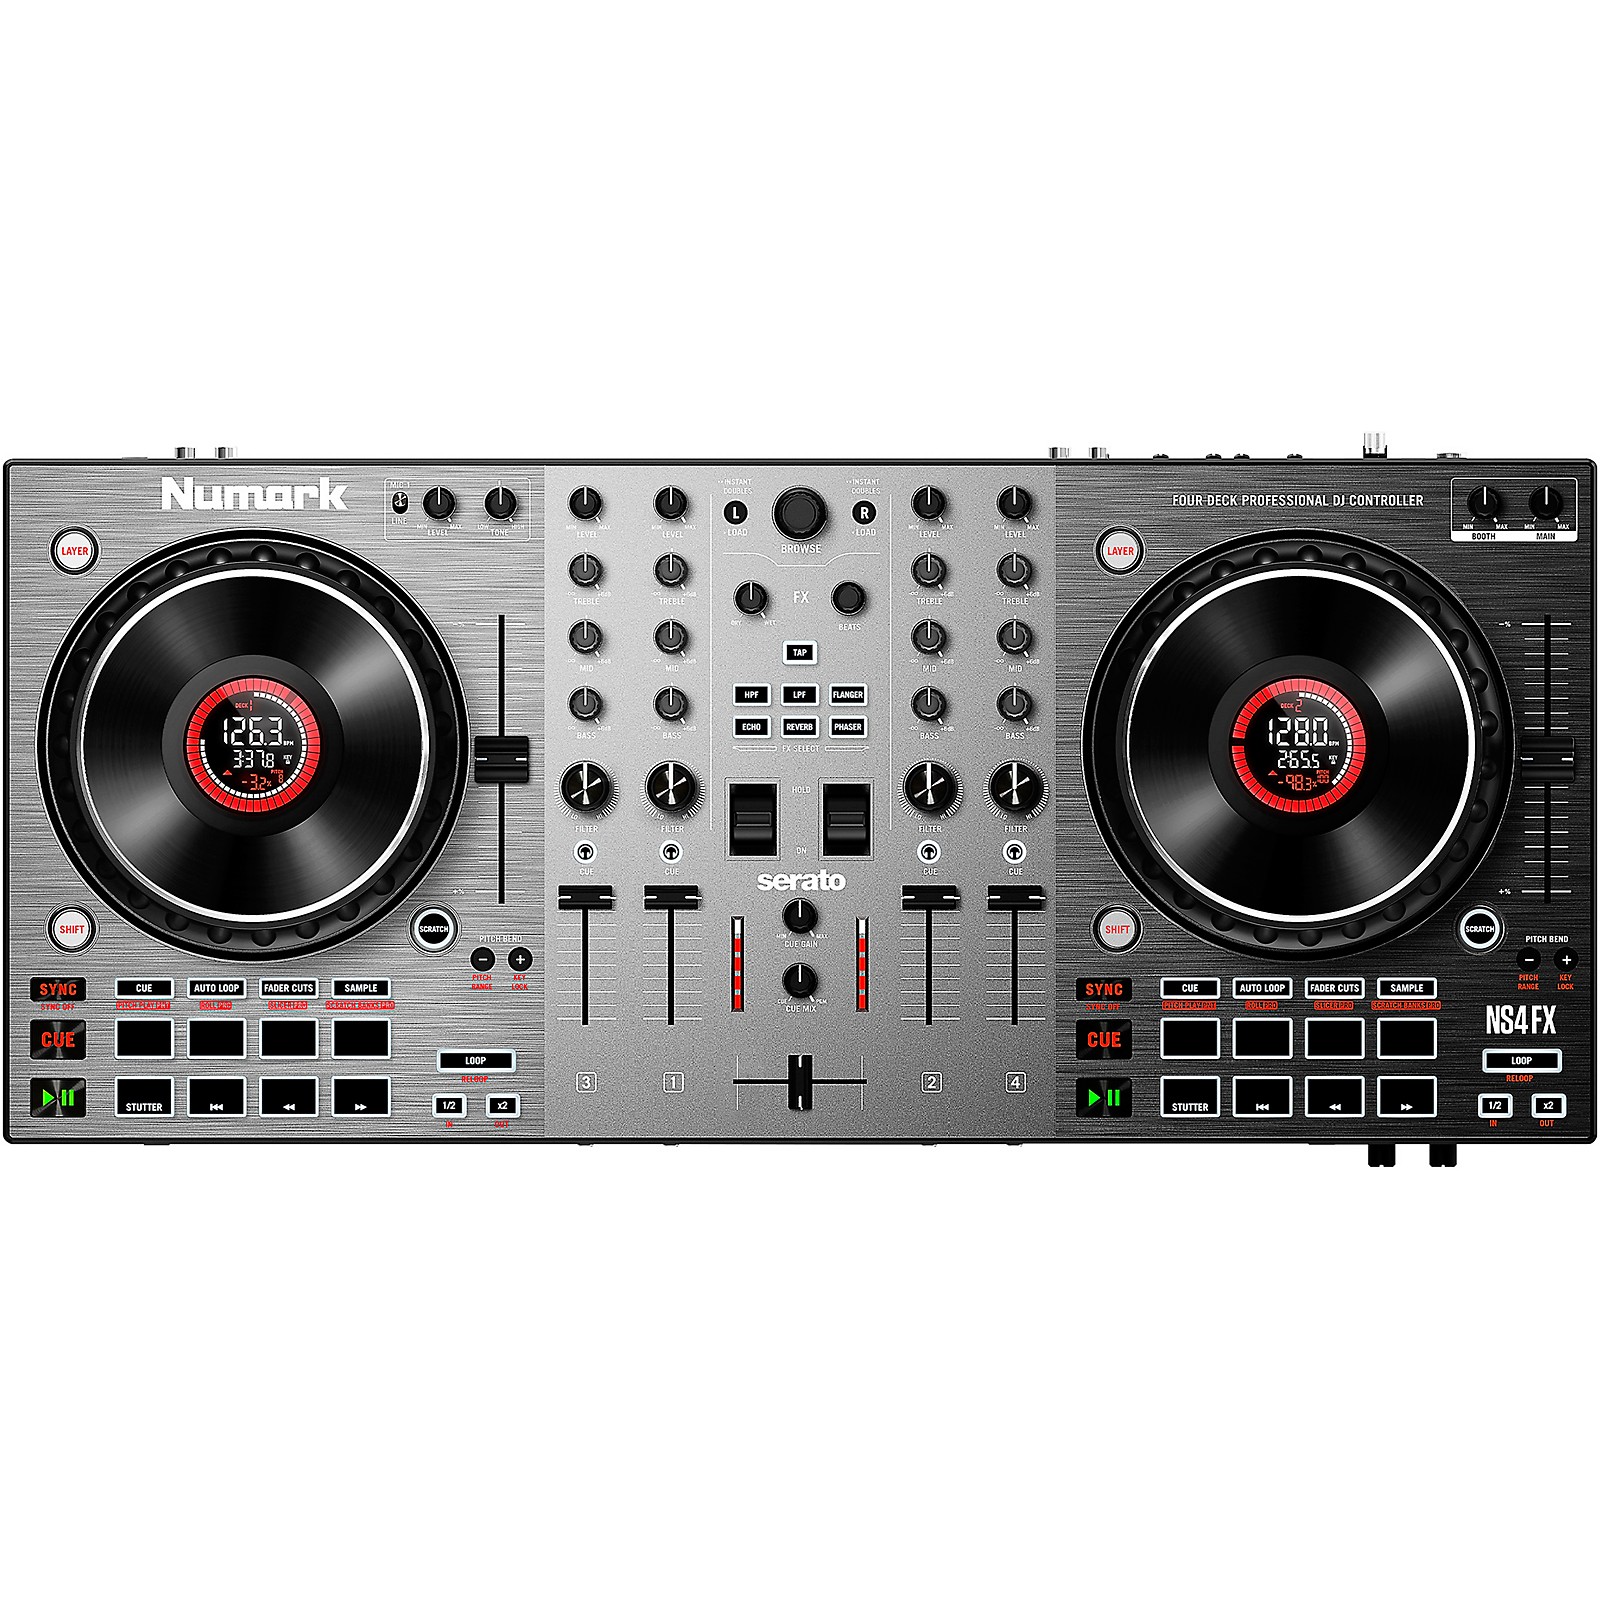 DISCONTINUED] Pioneer DJ DDJ-400 Compact Rekordbox DJ Controller - Sound  Productions